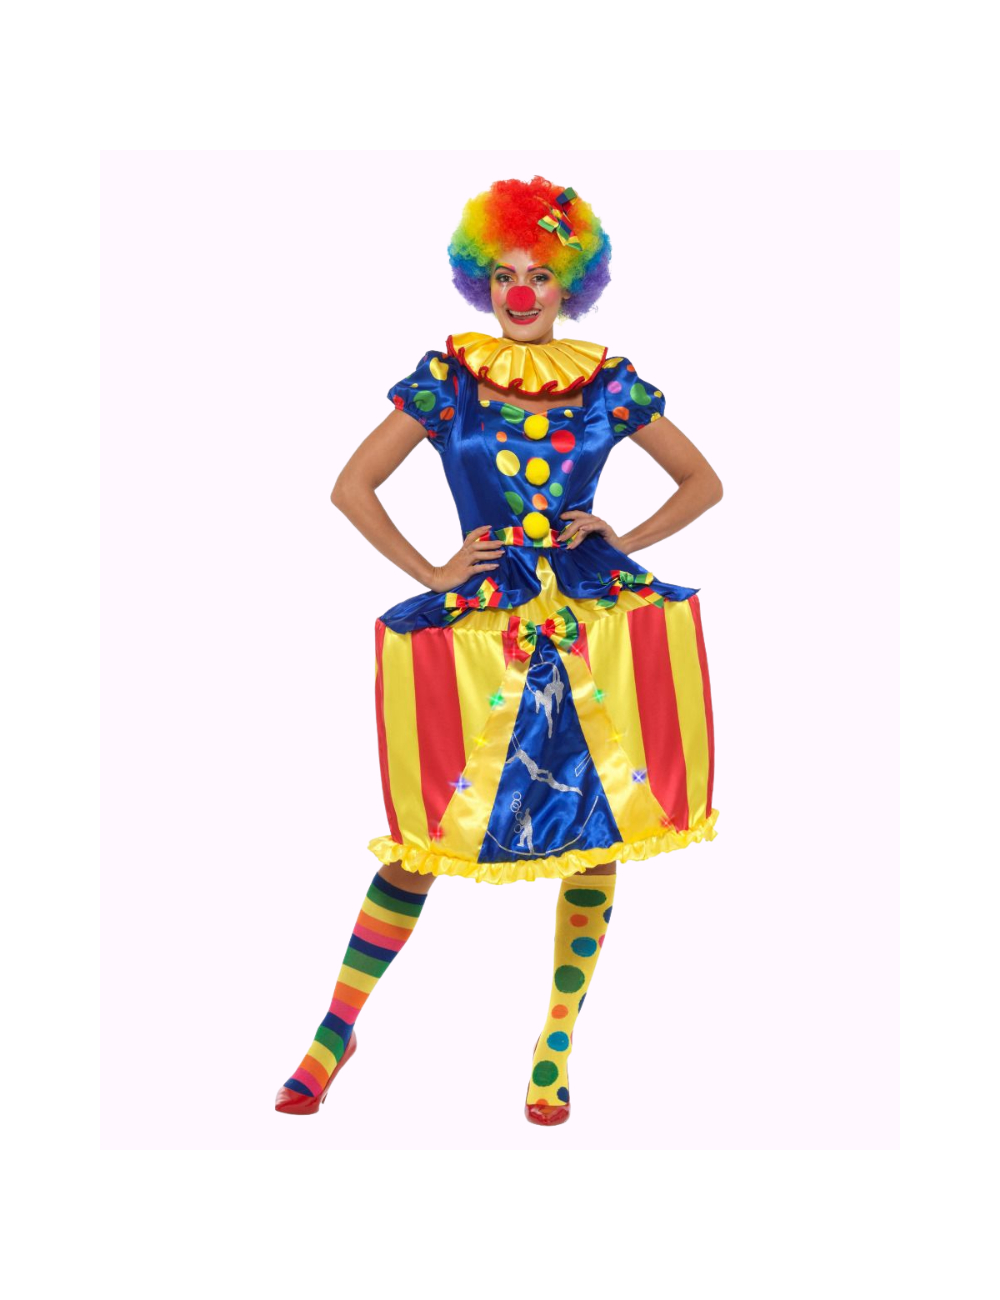 Costume woman of clown